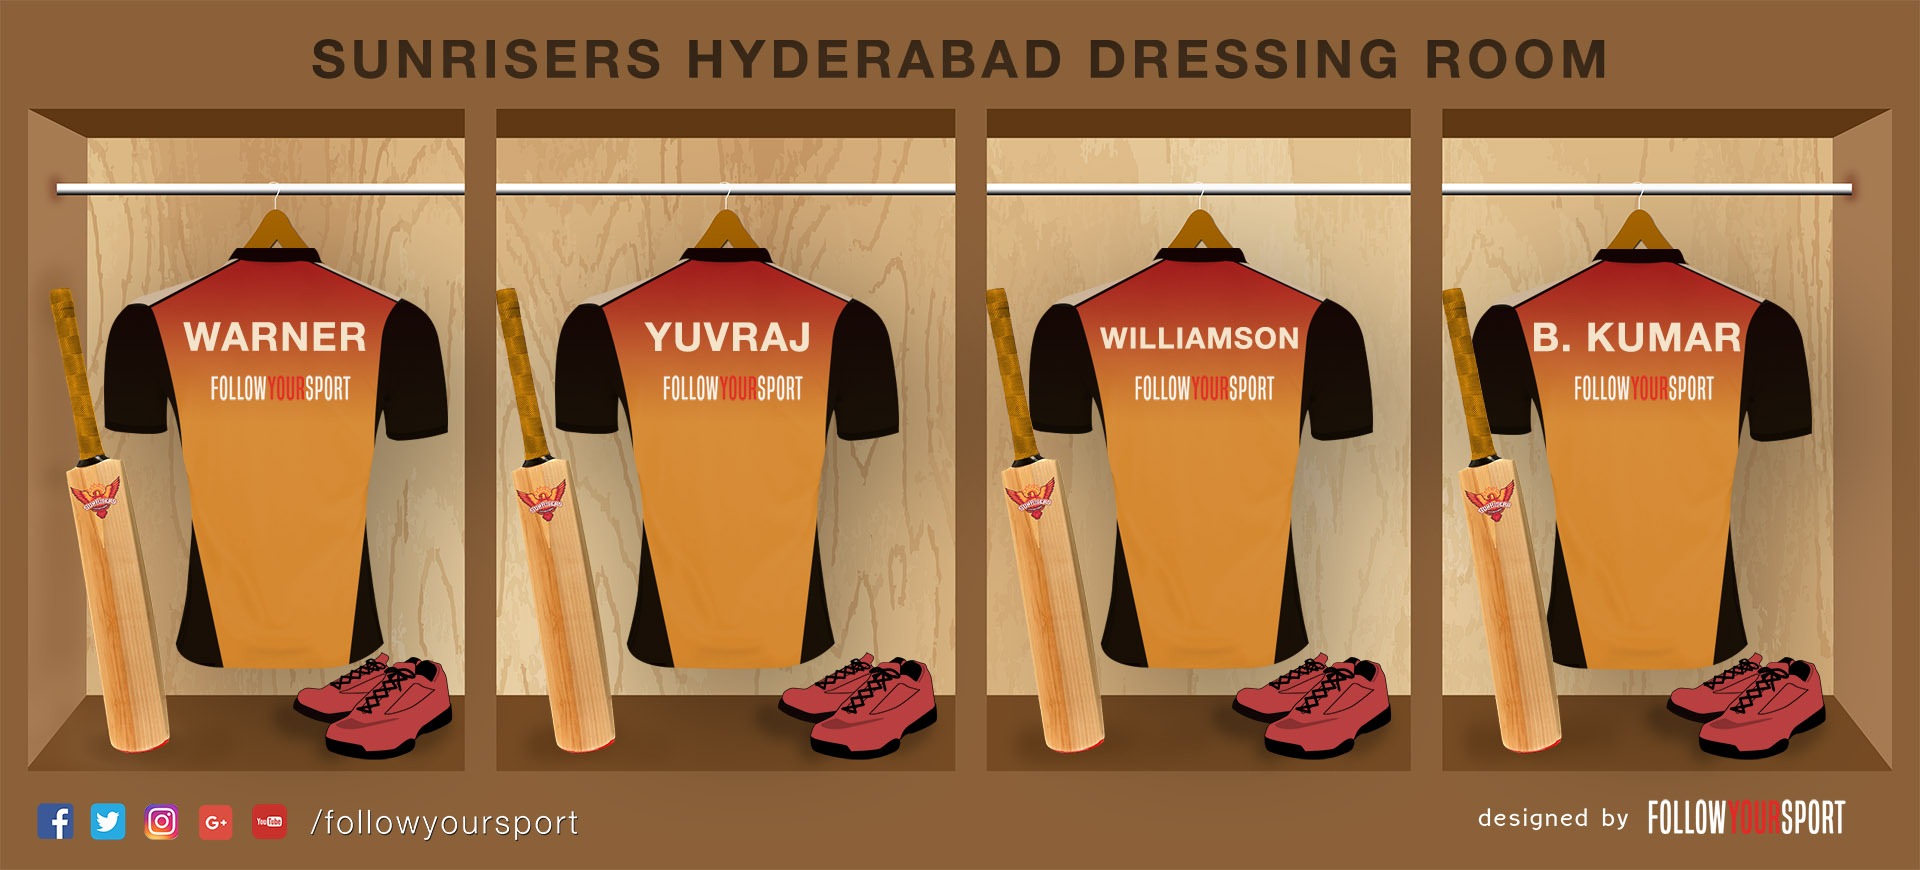 Sunrisers Hyderabad - Key Players 2017